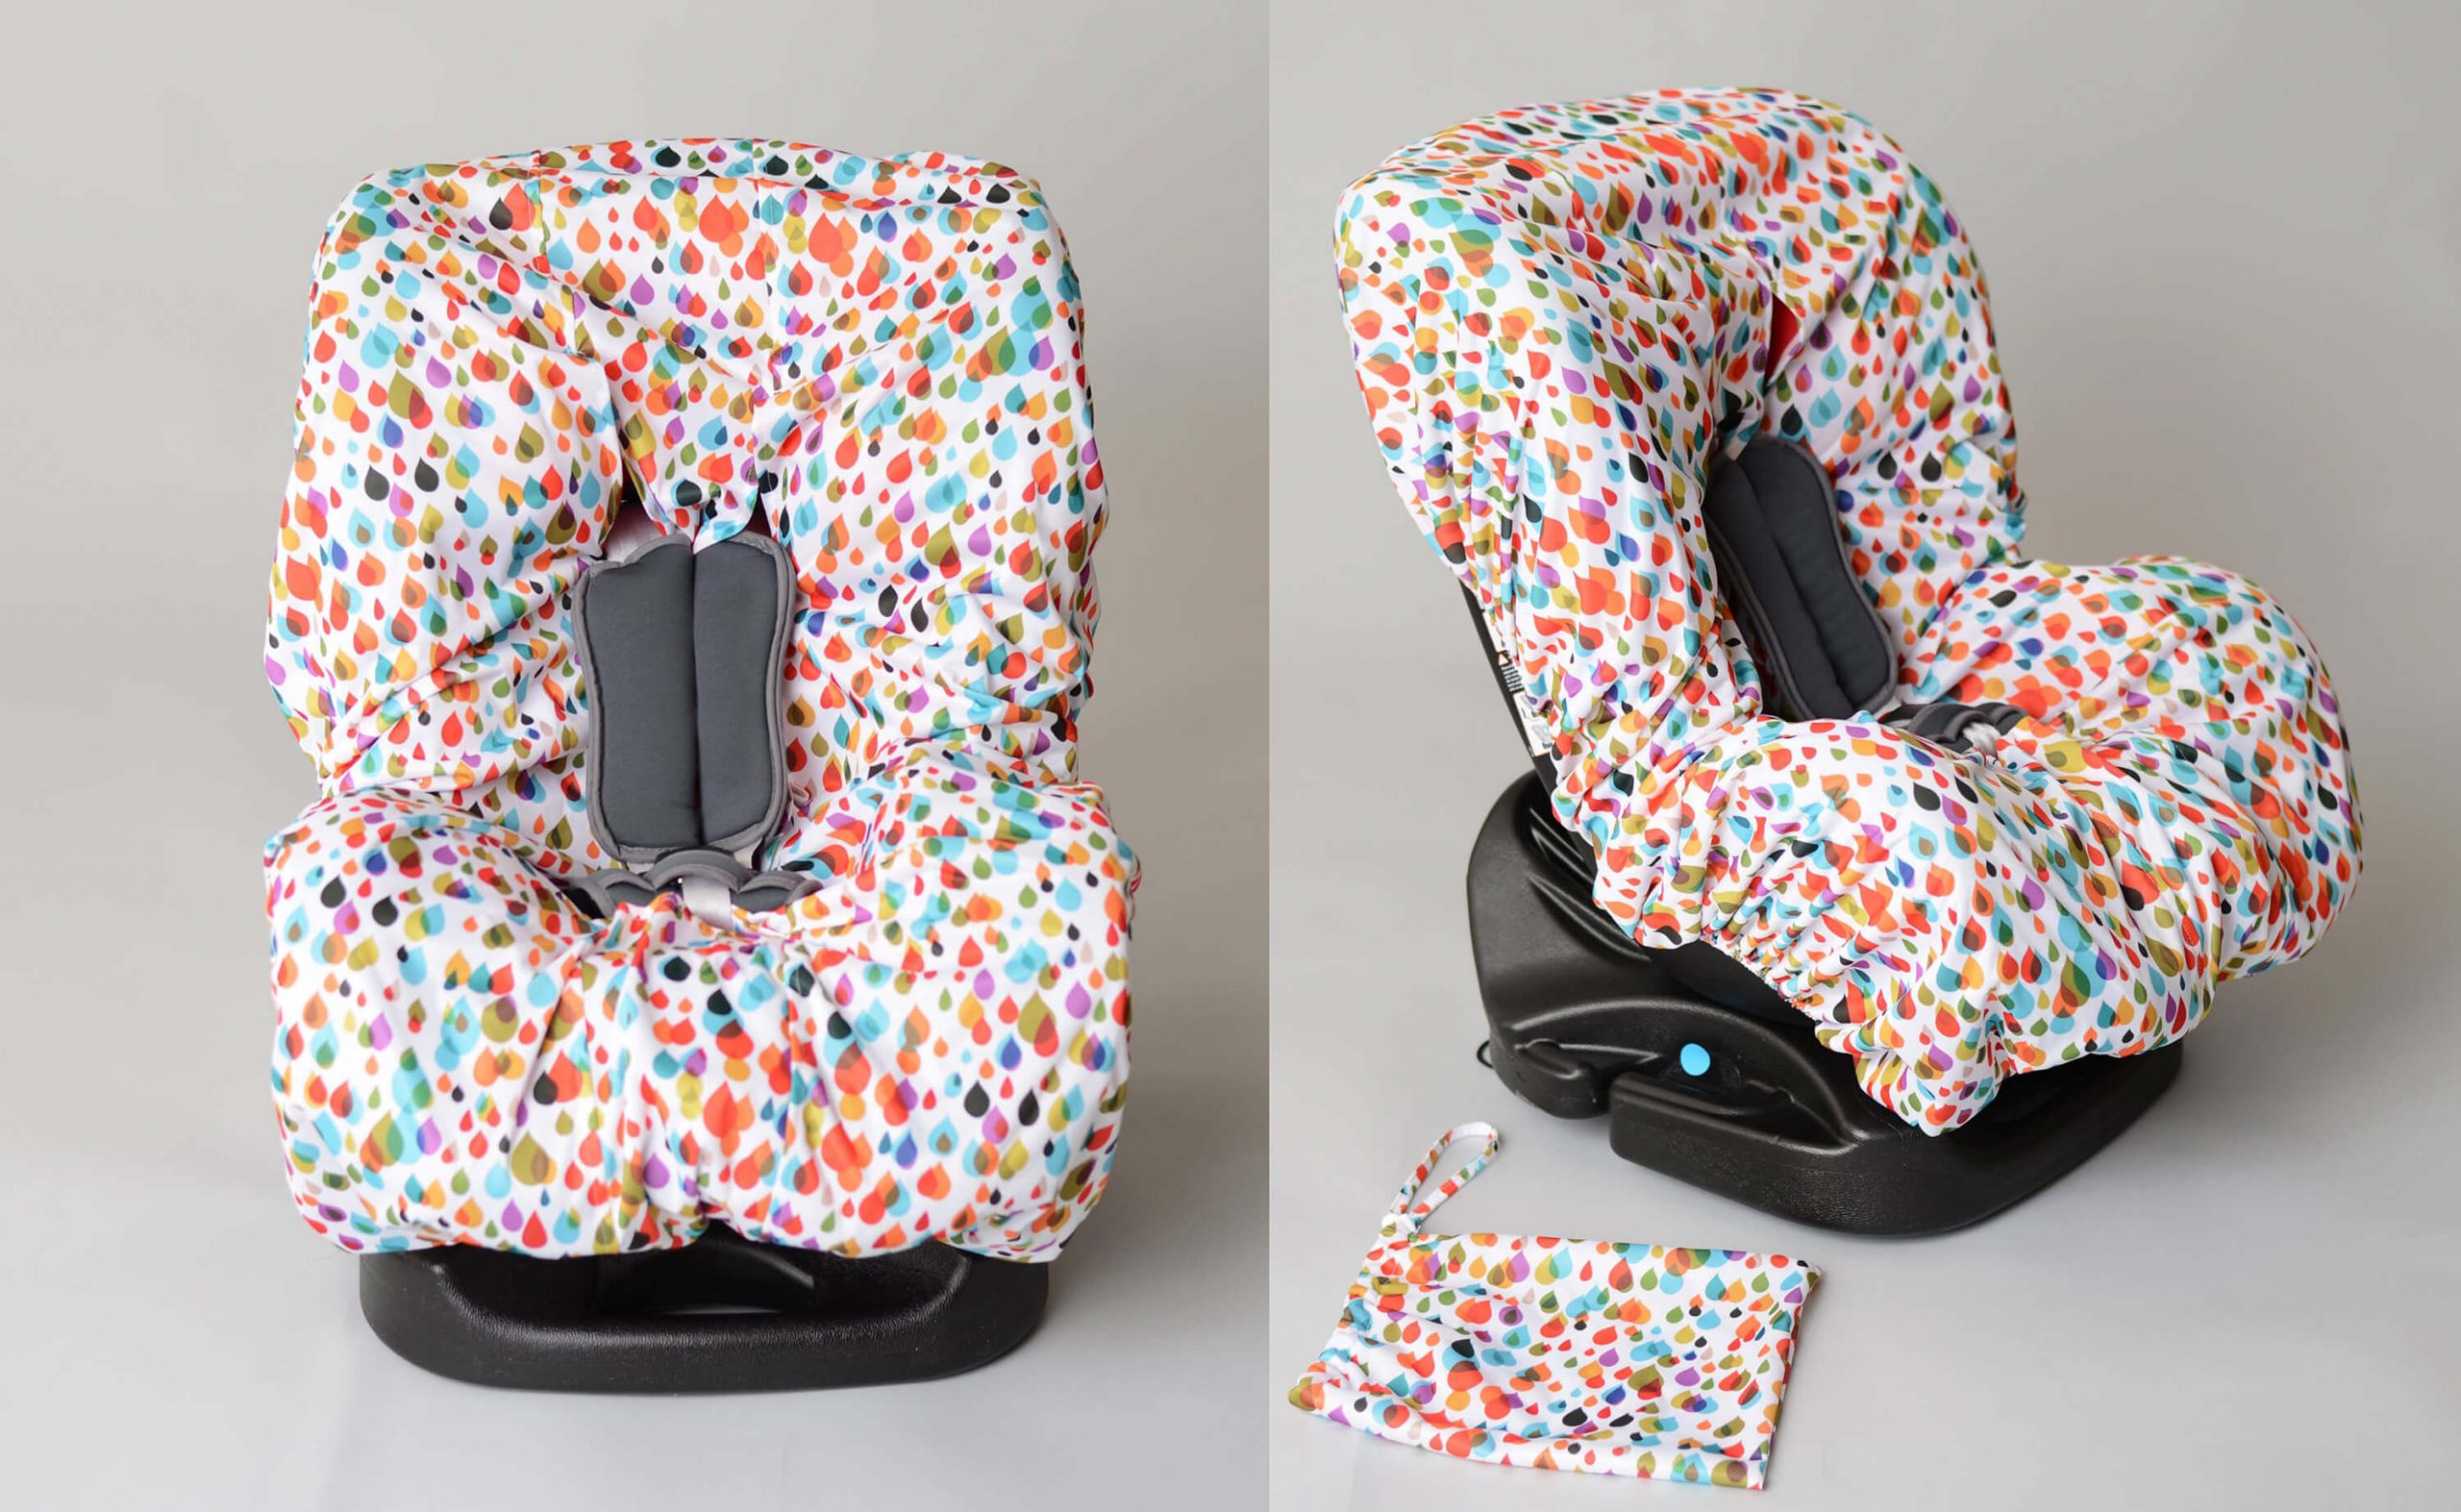 Fundas pis-pas. Diseño de estampados para sillitas de bebé